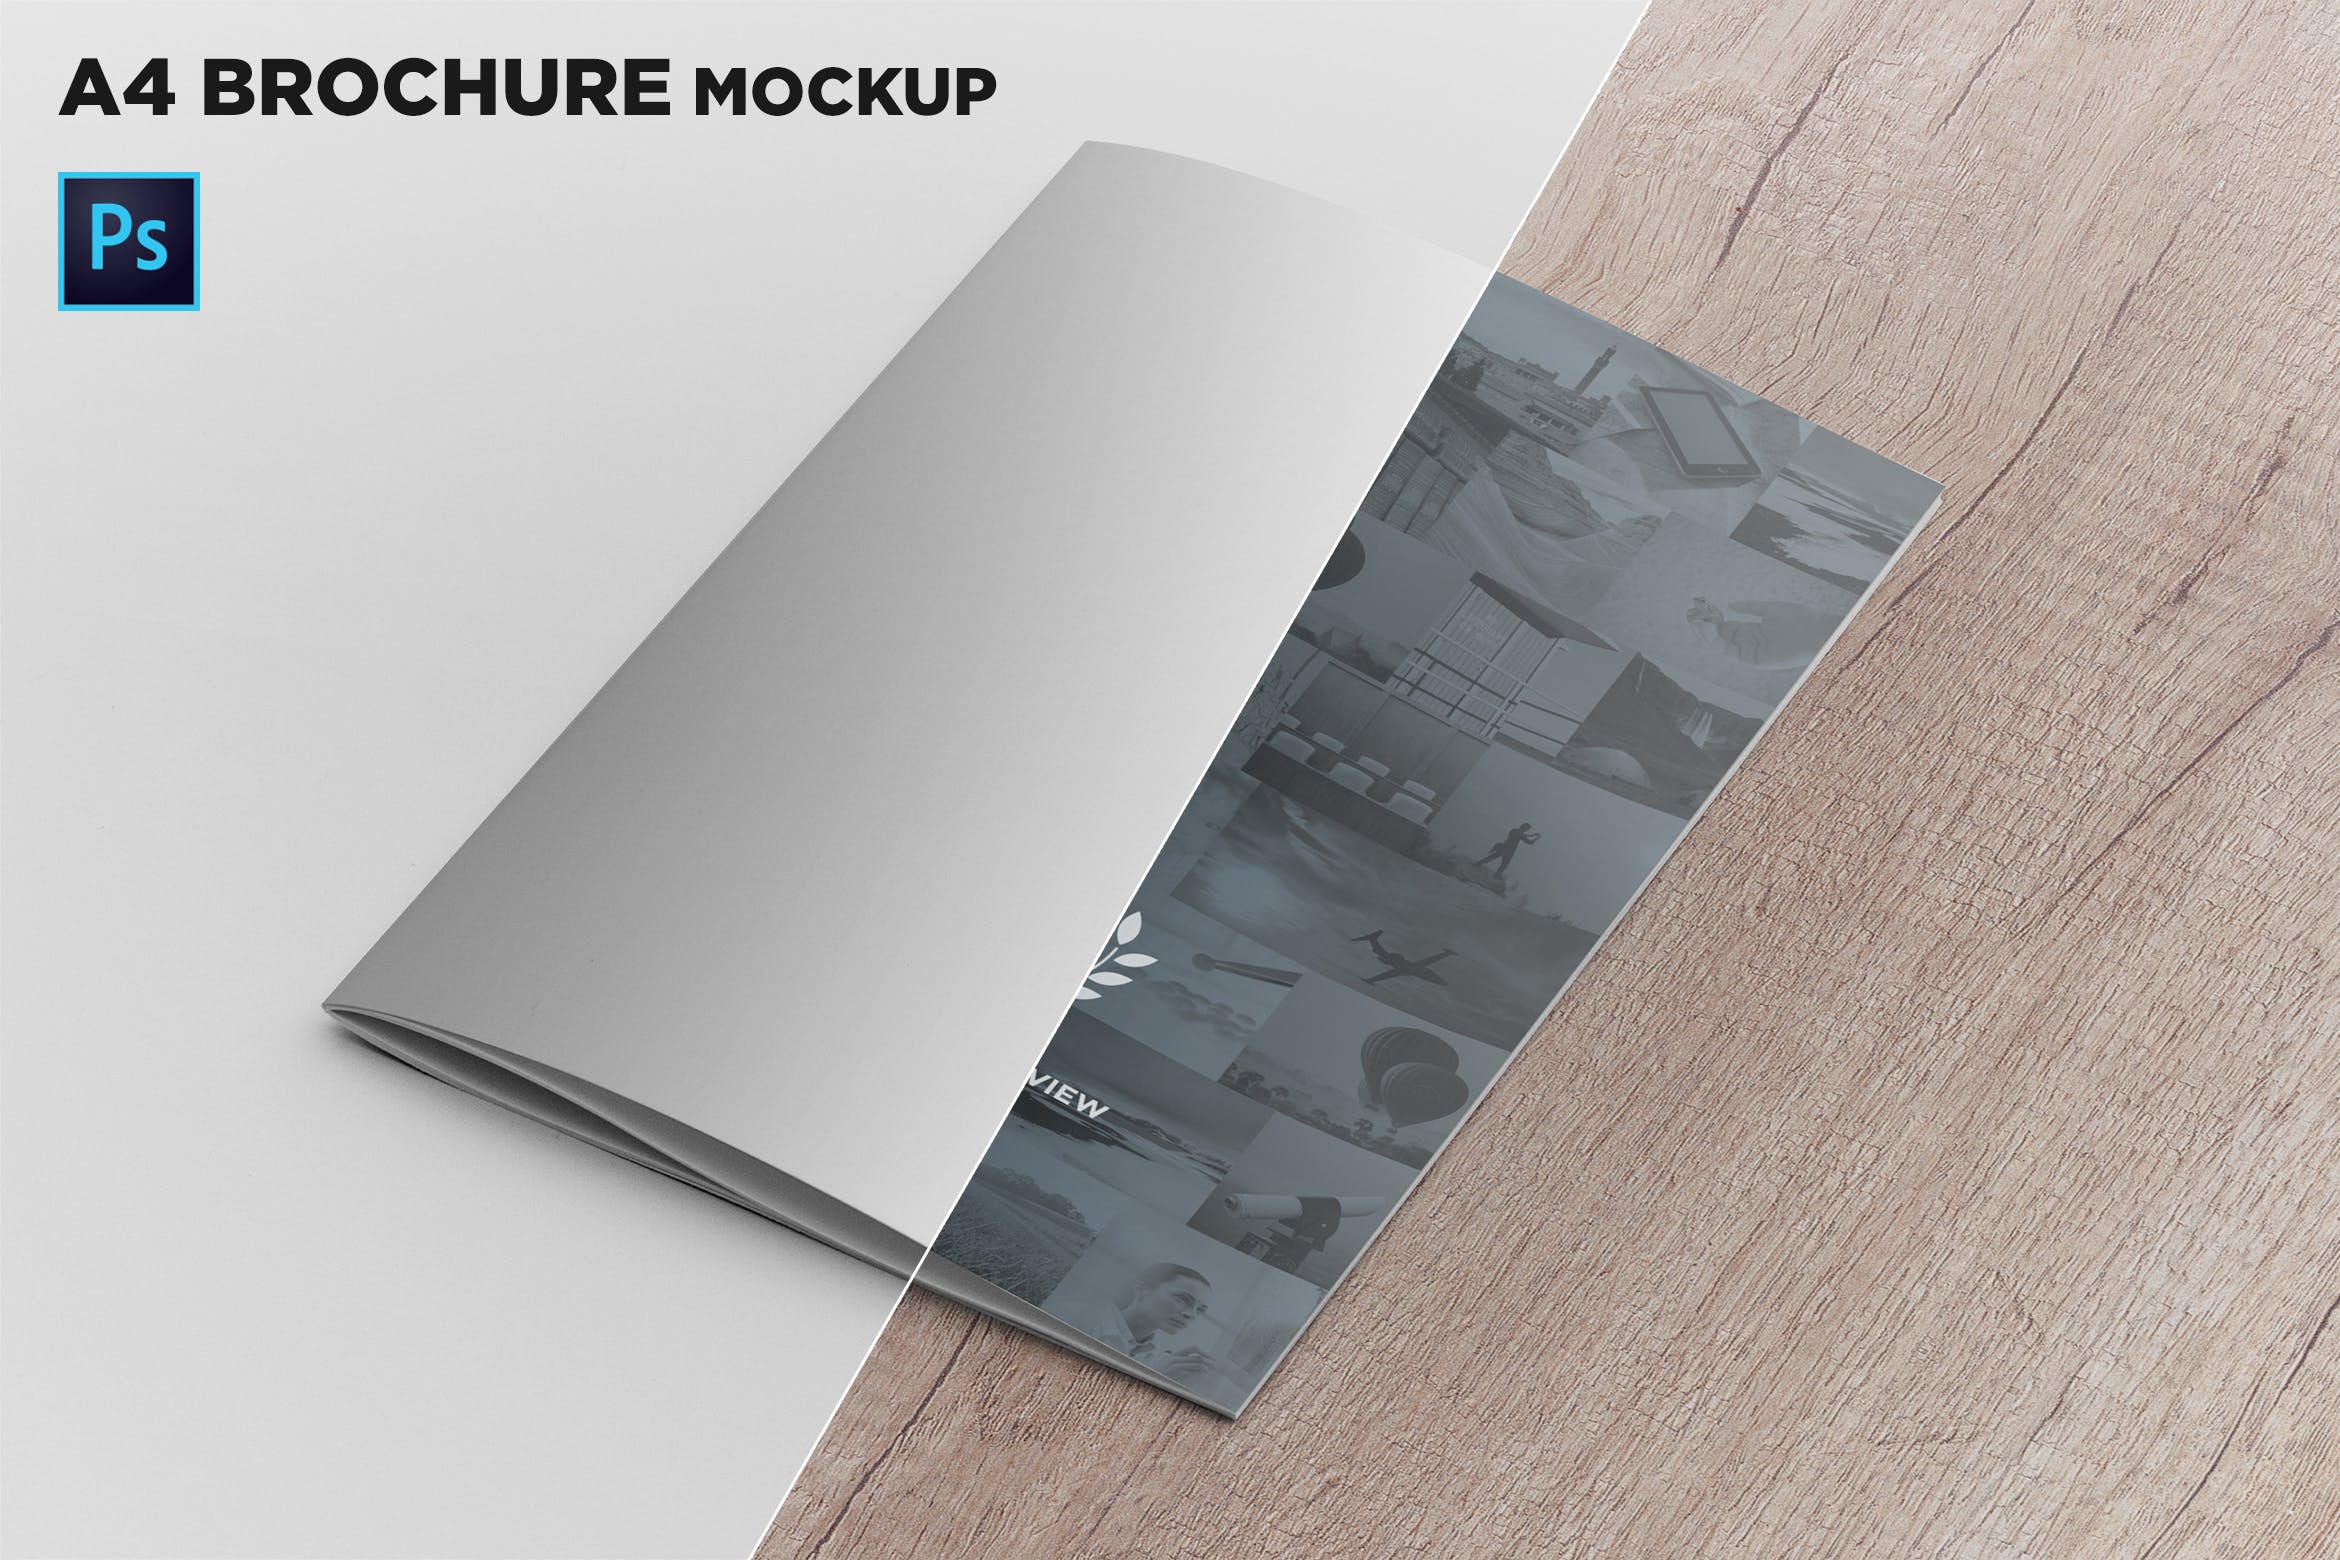 A4尺寸企业/品牌宣传册封面效果图样机非凡图库精选模板 A4 Brochure Cover Mockup Perspective View插图